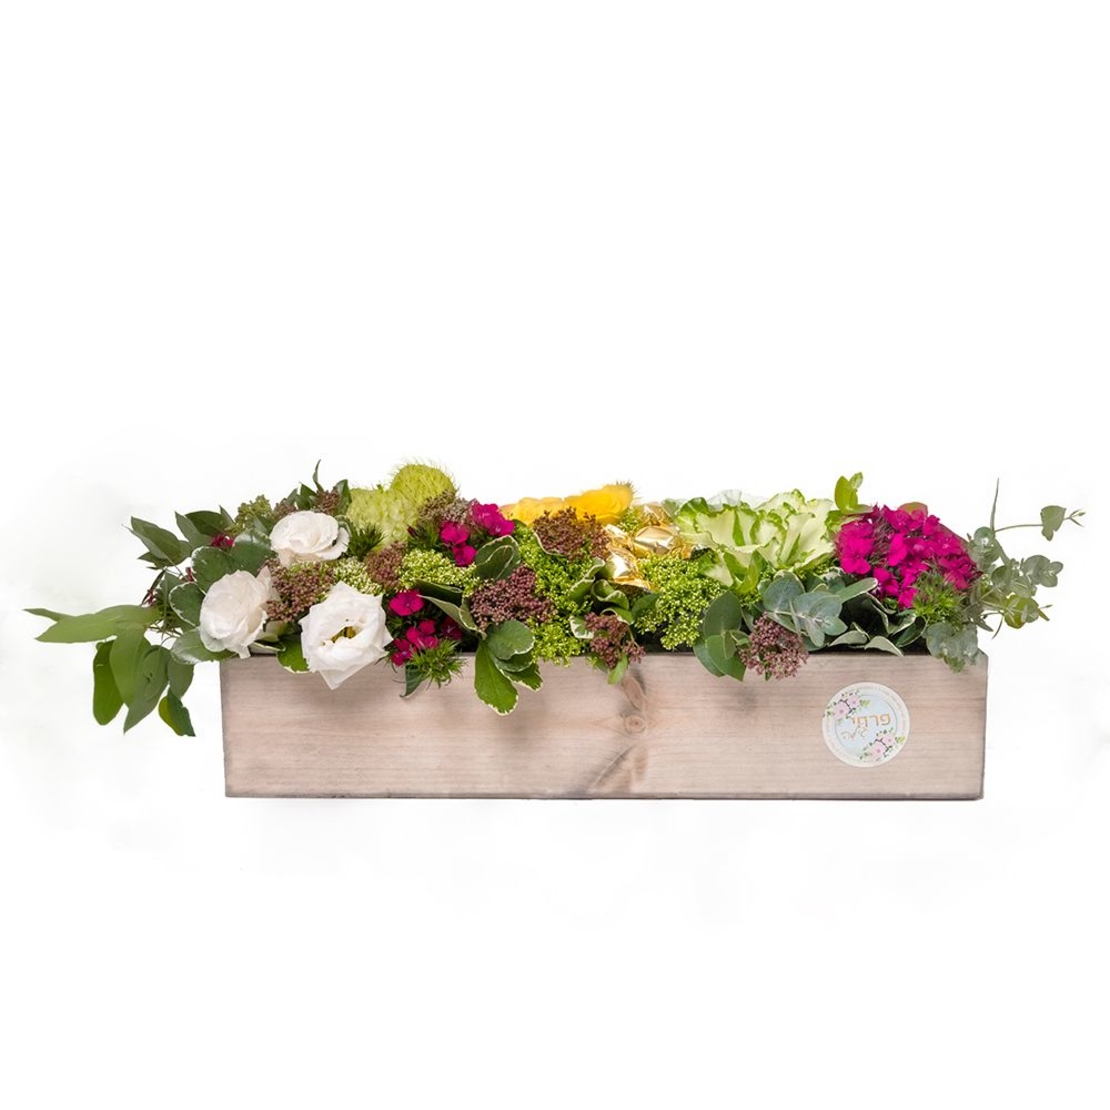 Flower Arrangement in a Wooden Box